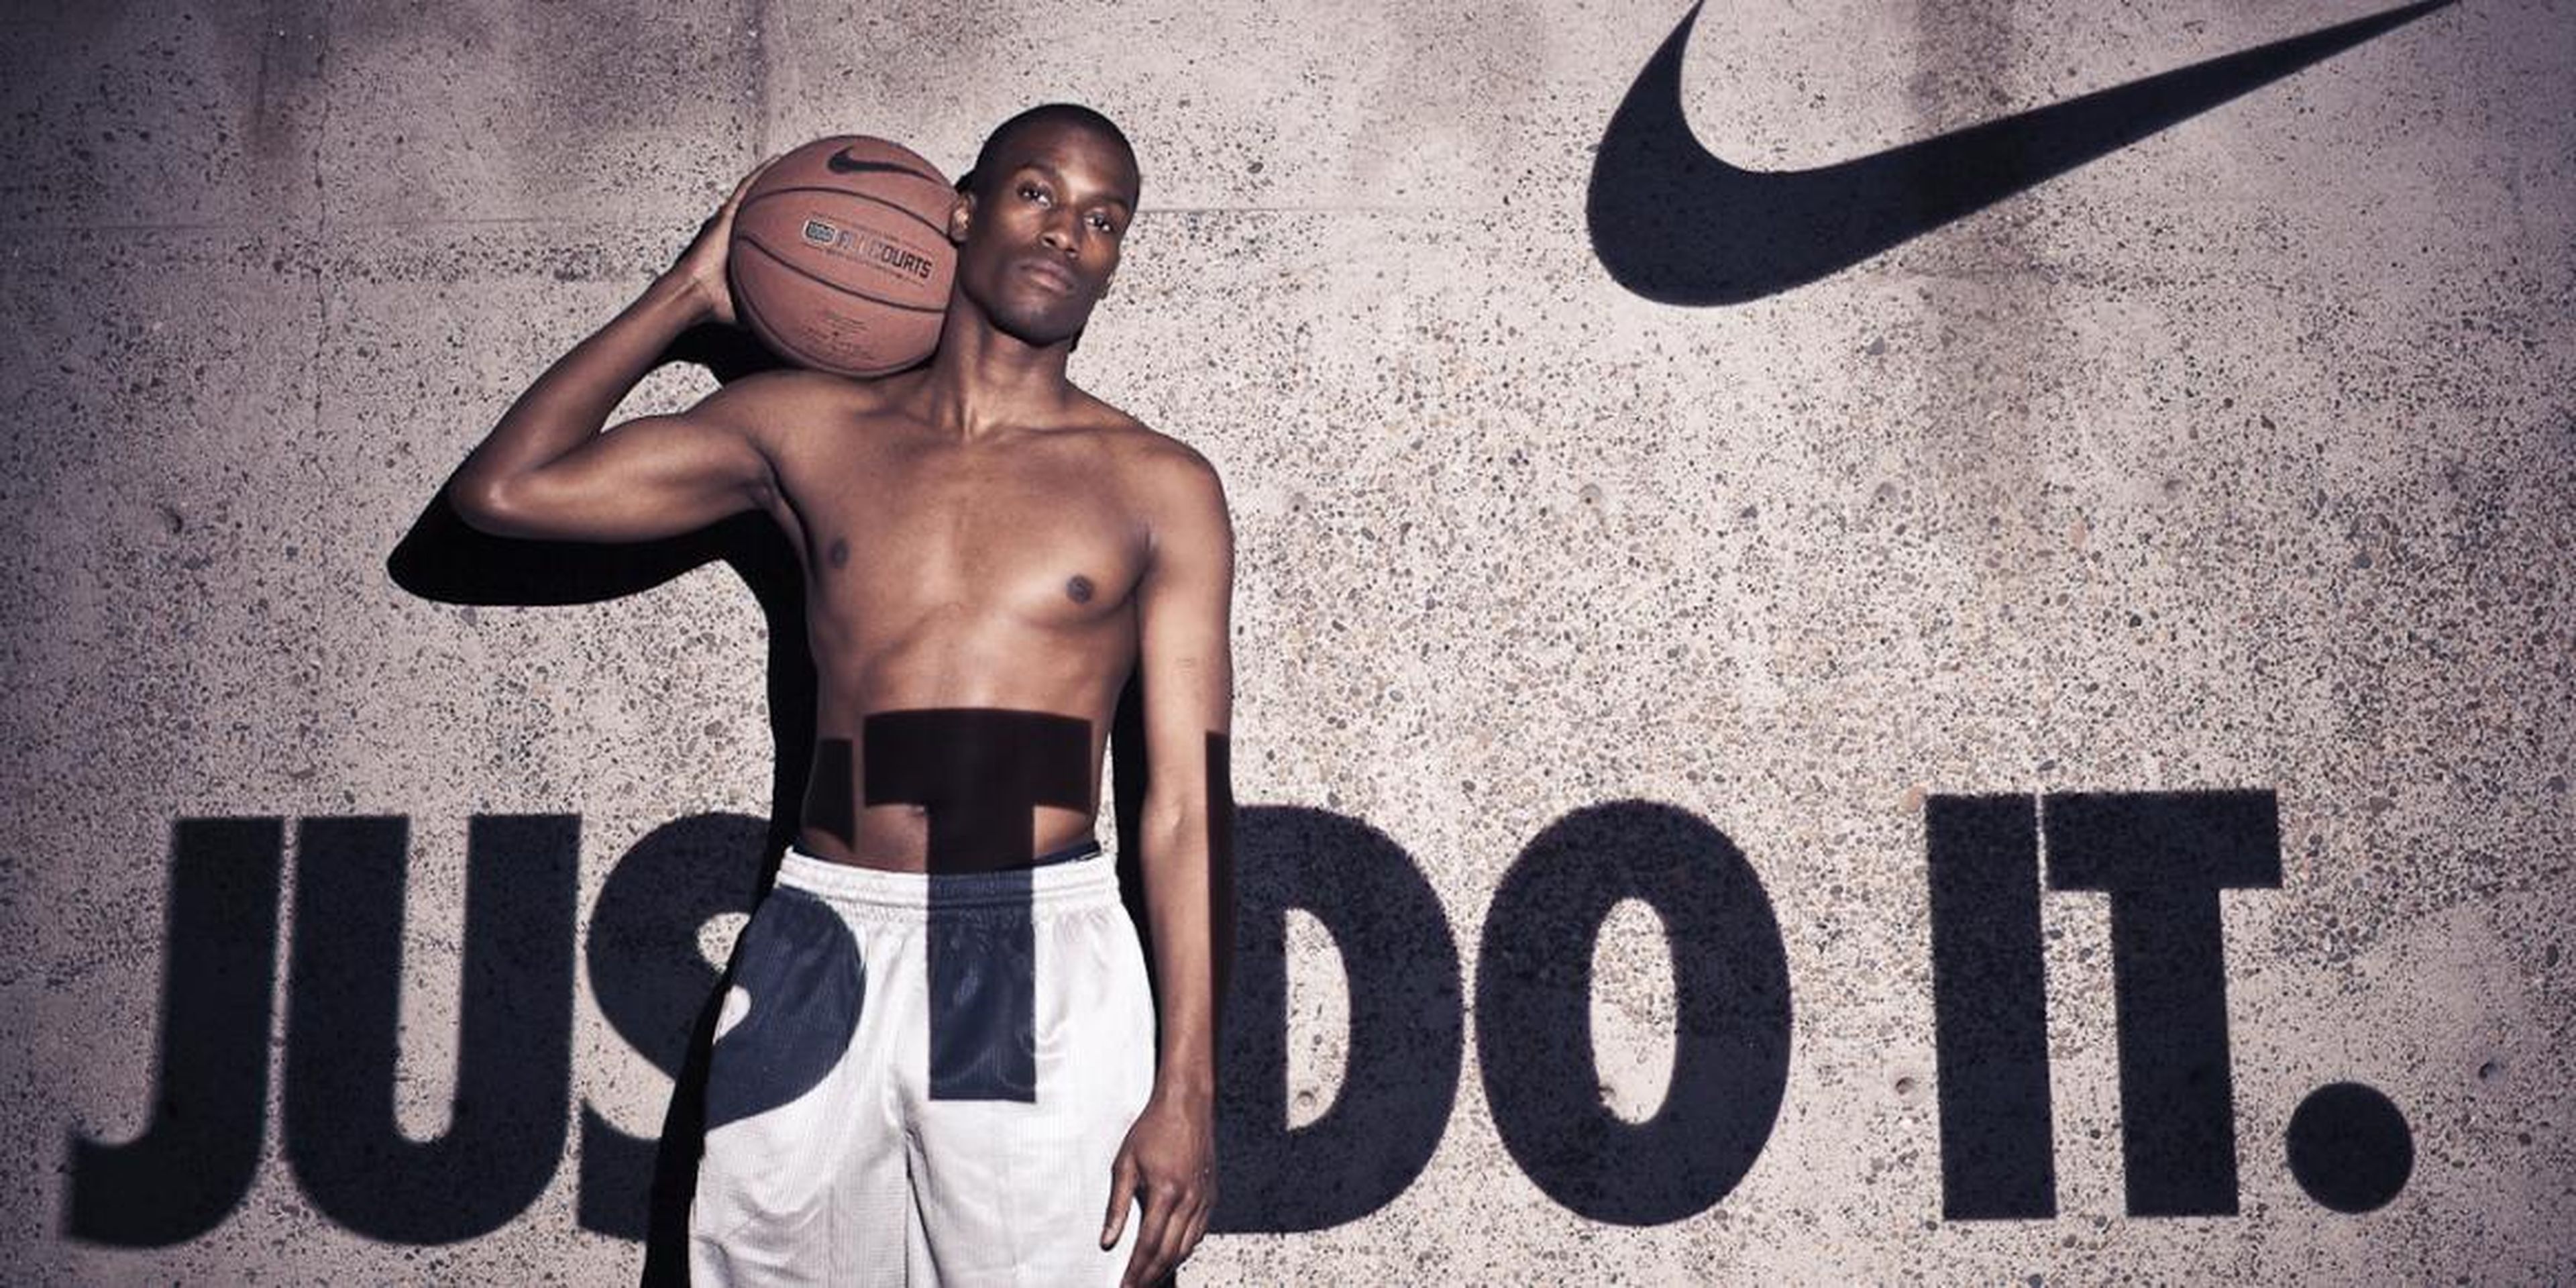 eslogan Nike está inspirado en la de un asesino | Business Insider España